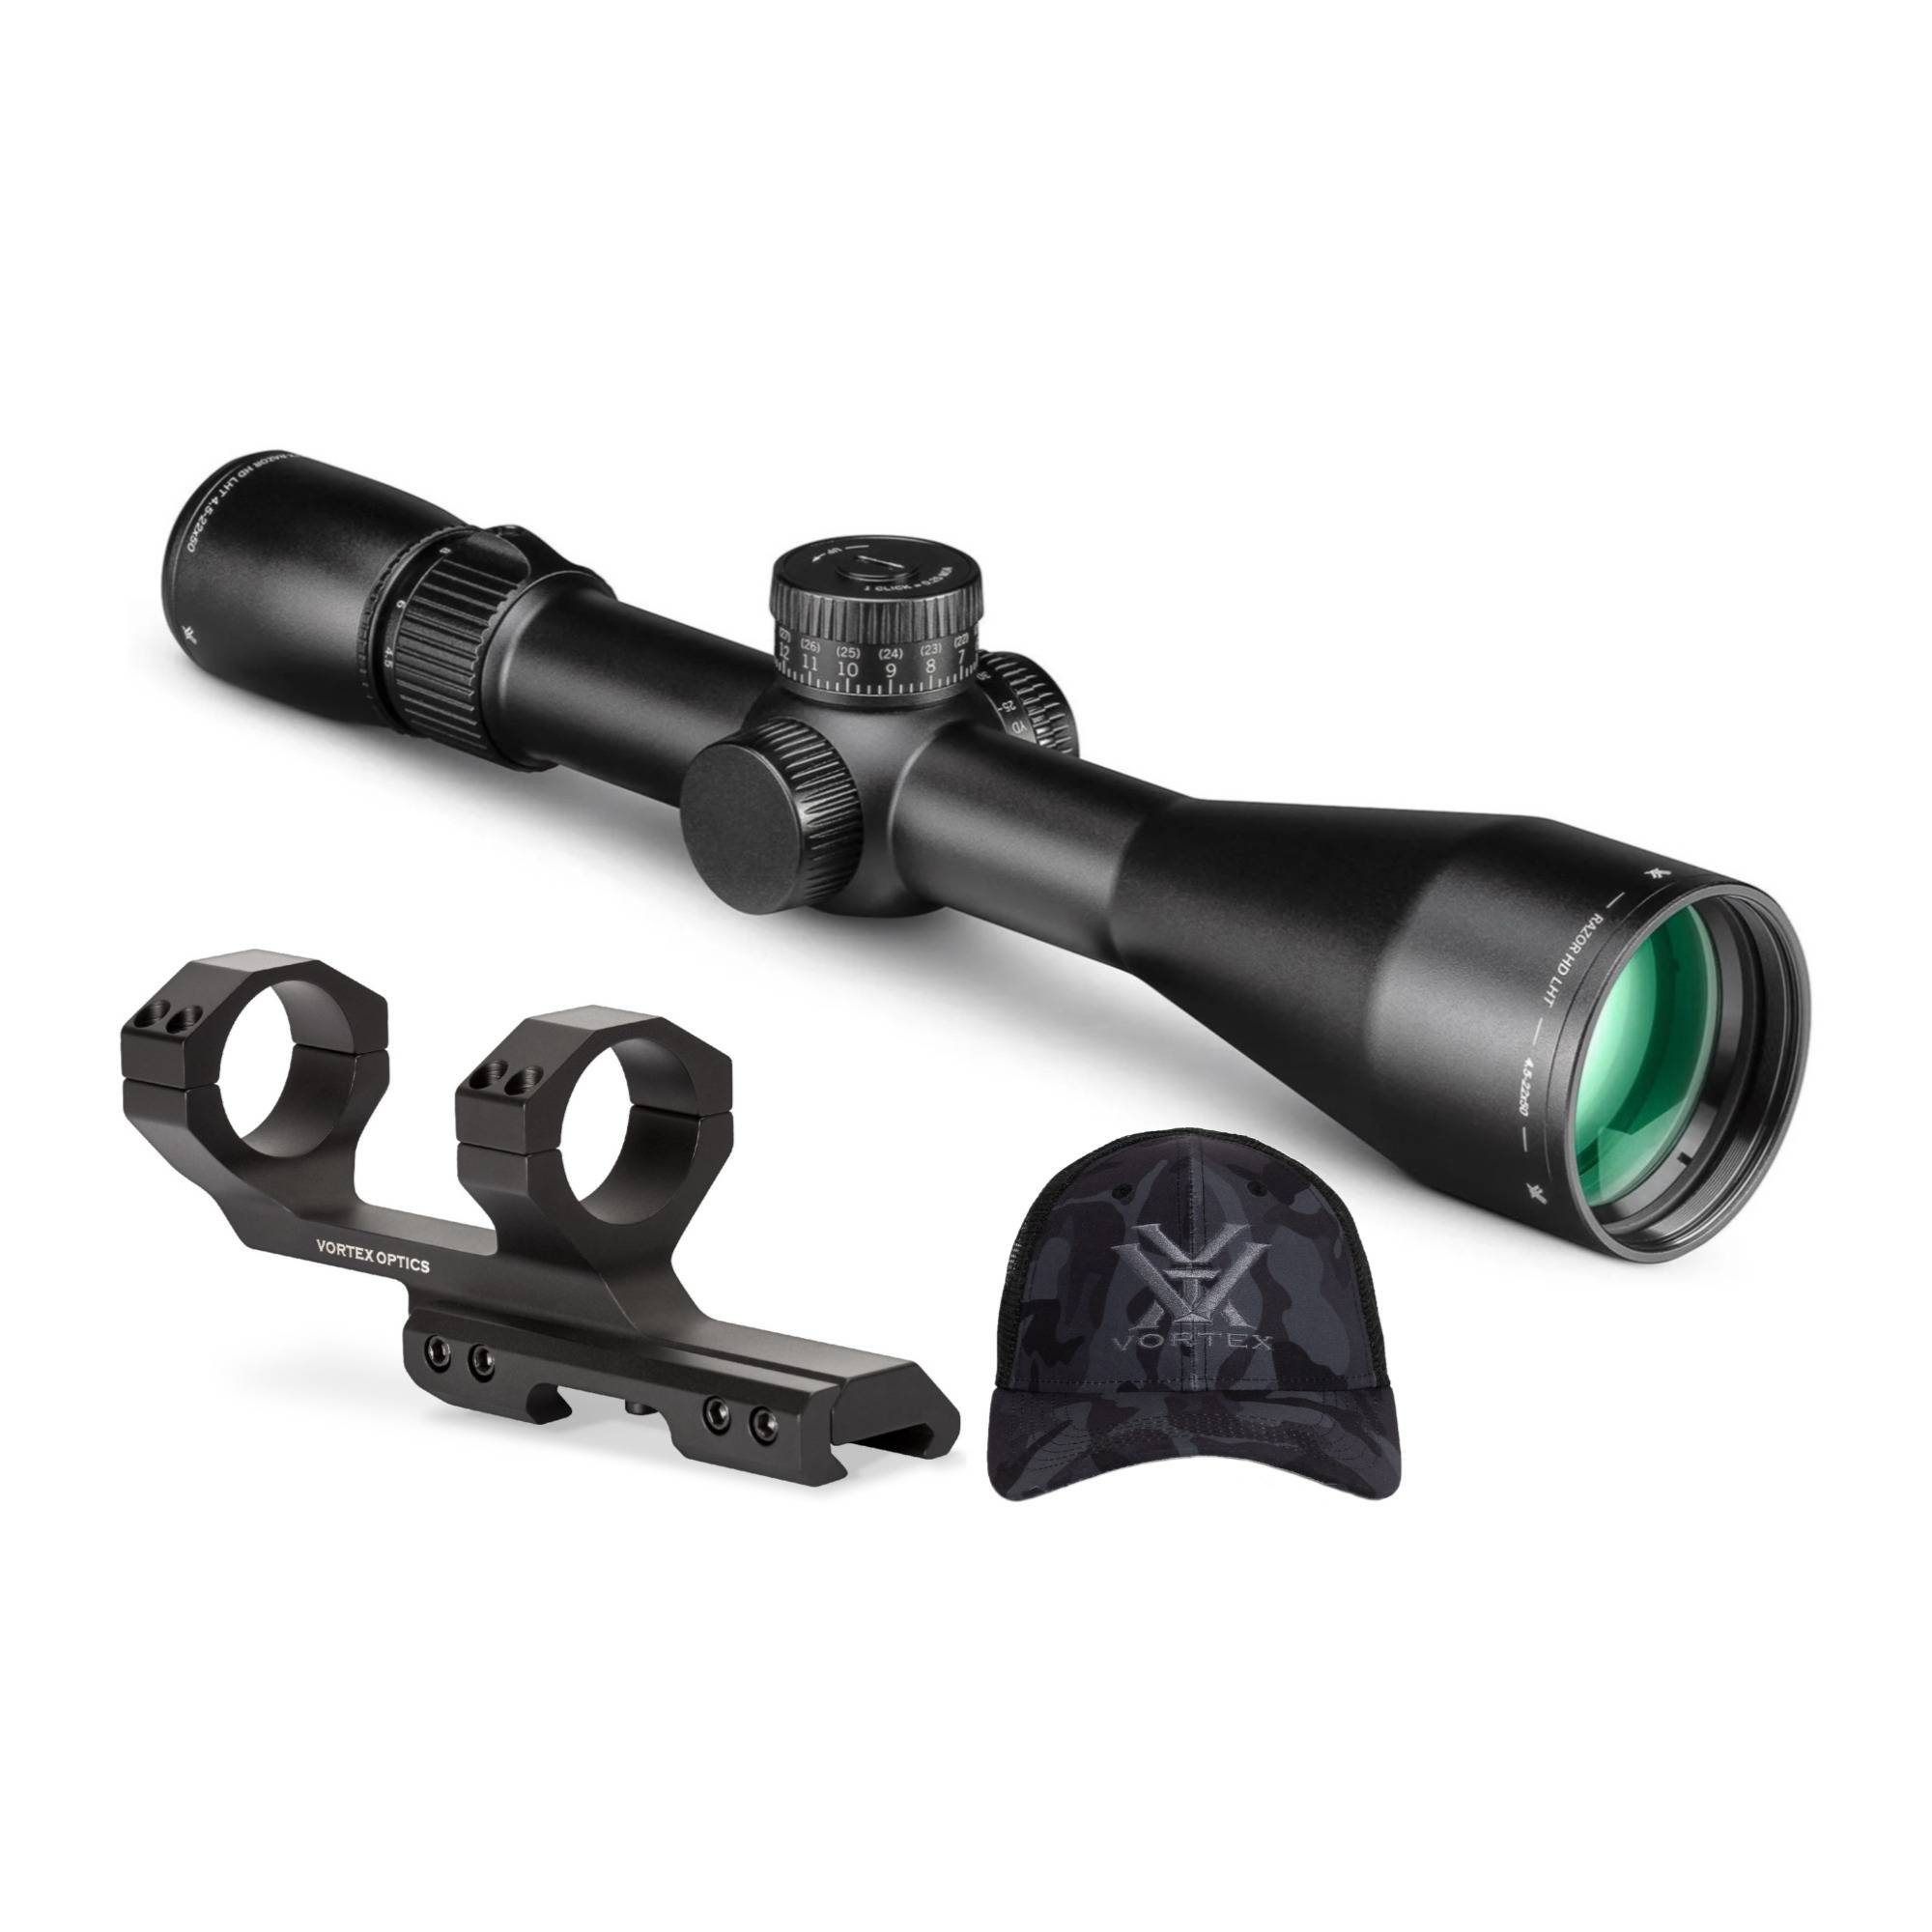 Vortex Razor LHT 4.5-22x50 FFP Riflescope with Cantilever Mount and Hat Bundle